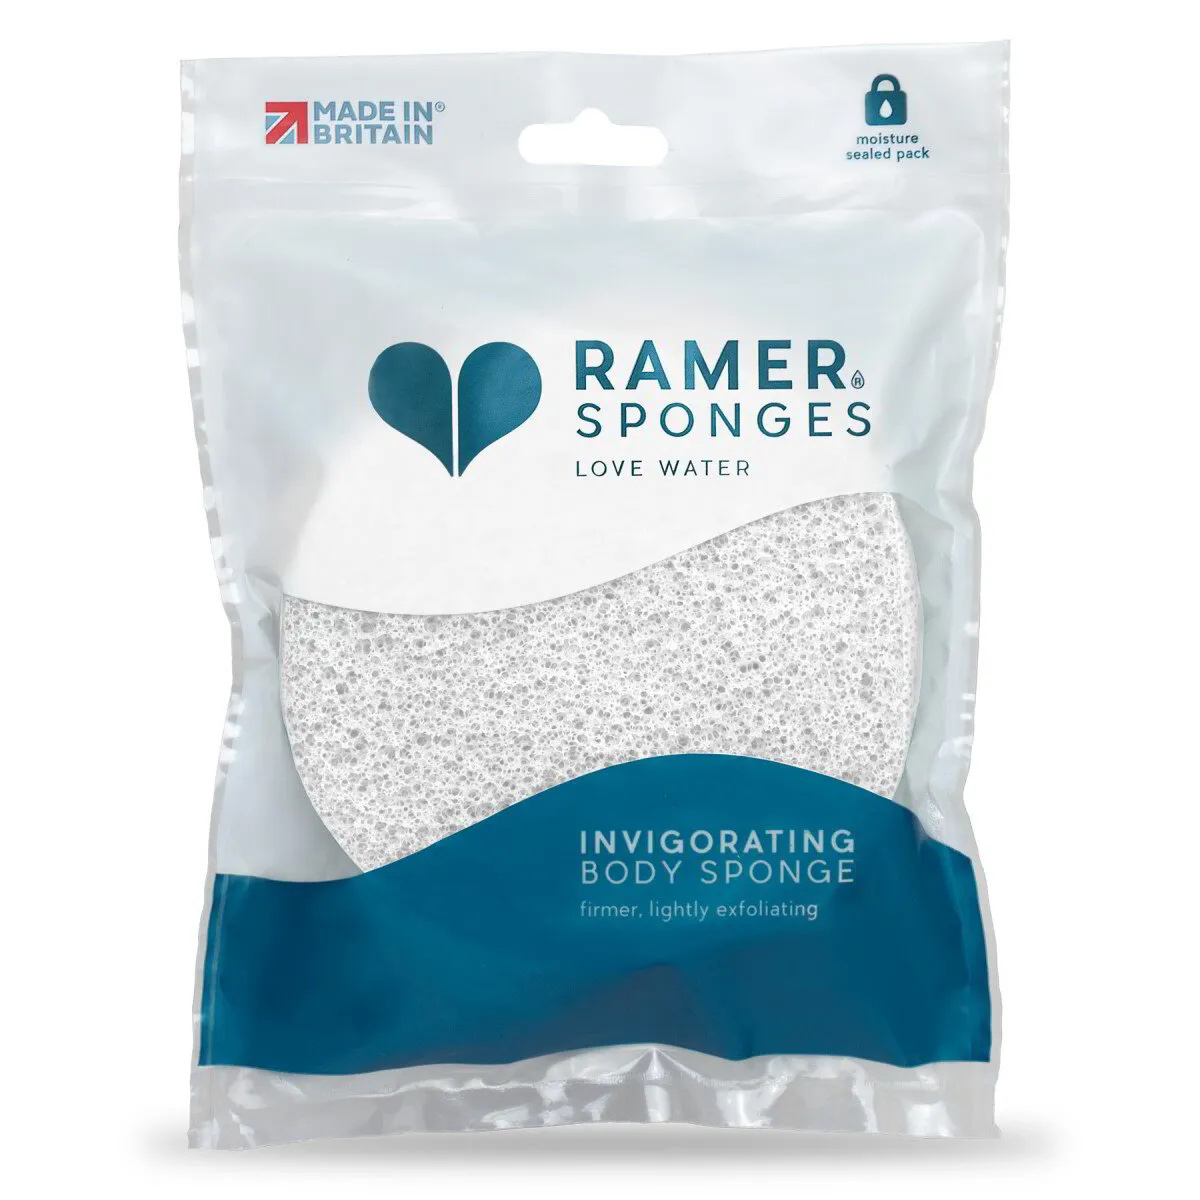 Ramer Small Invigorating Body Sponge